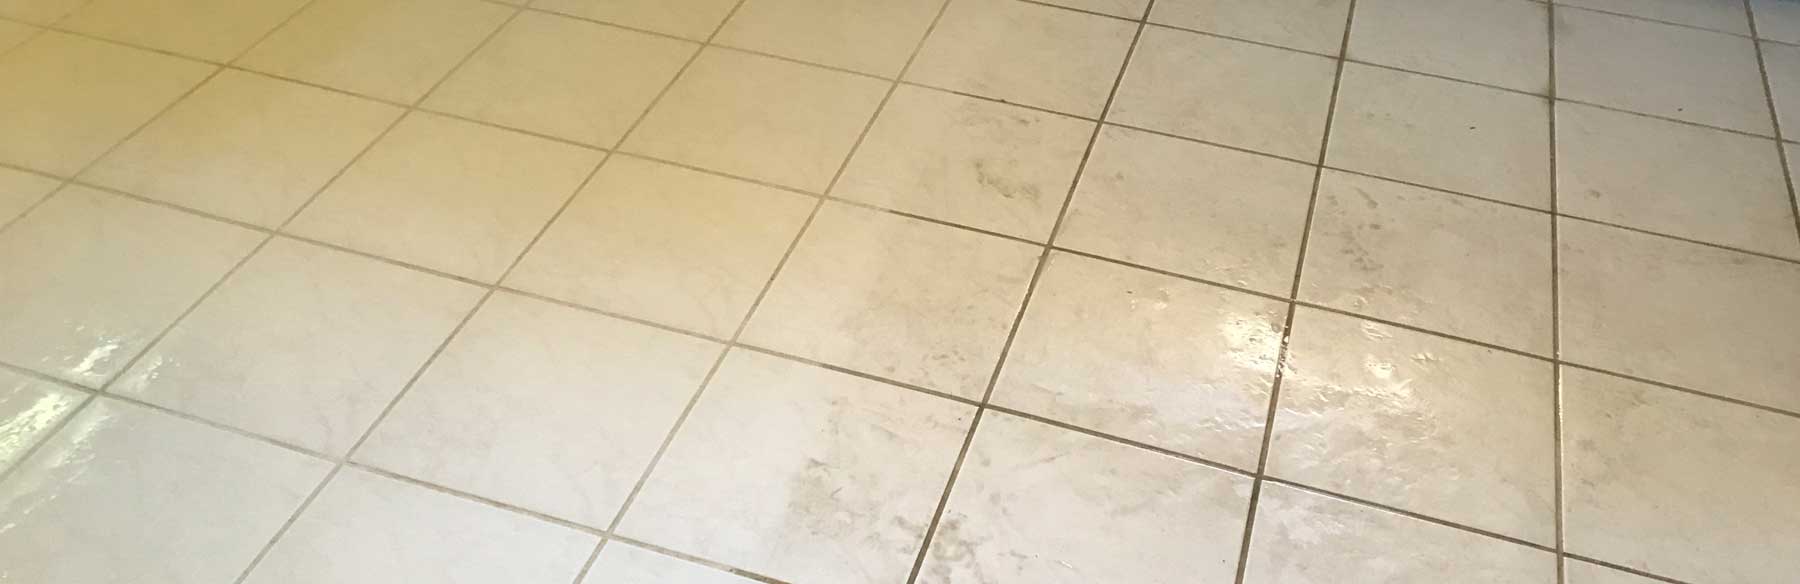 Tile floor cleaning